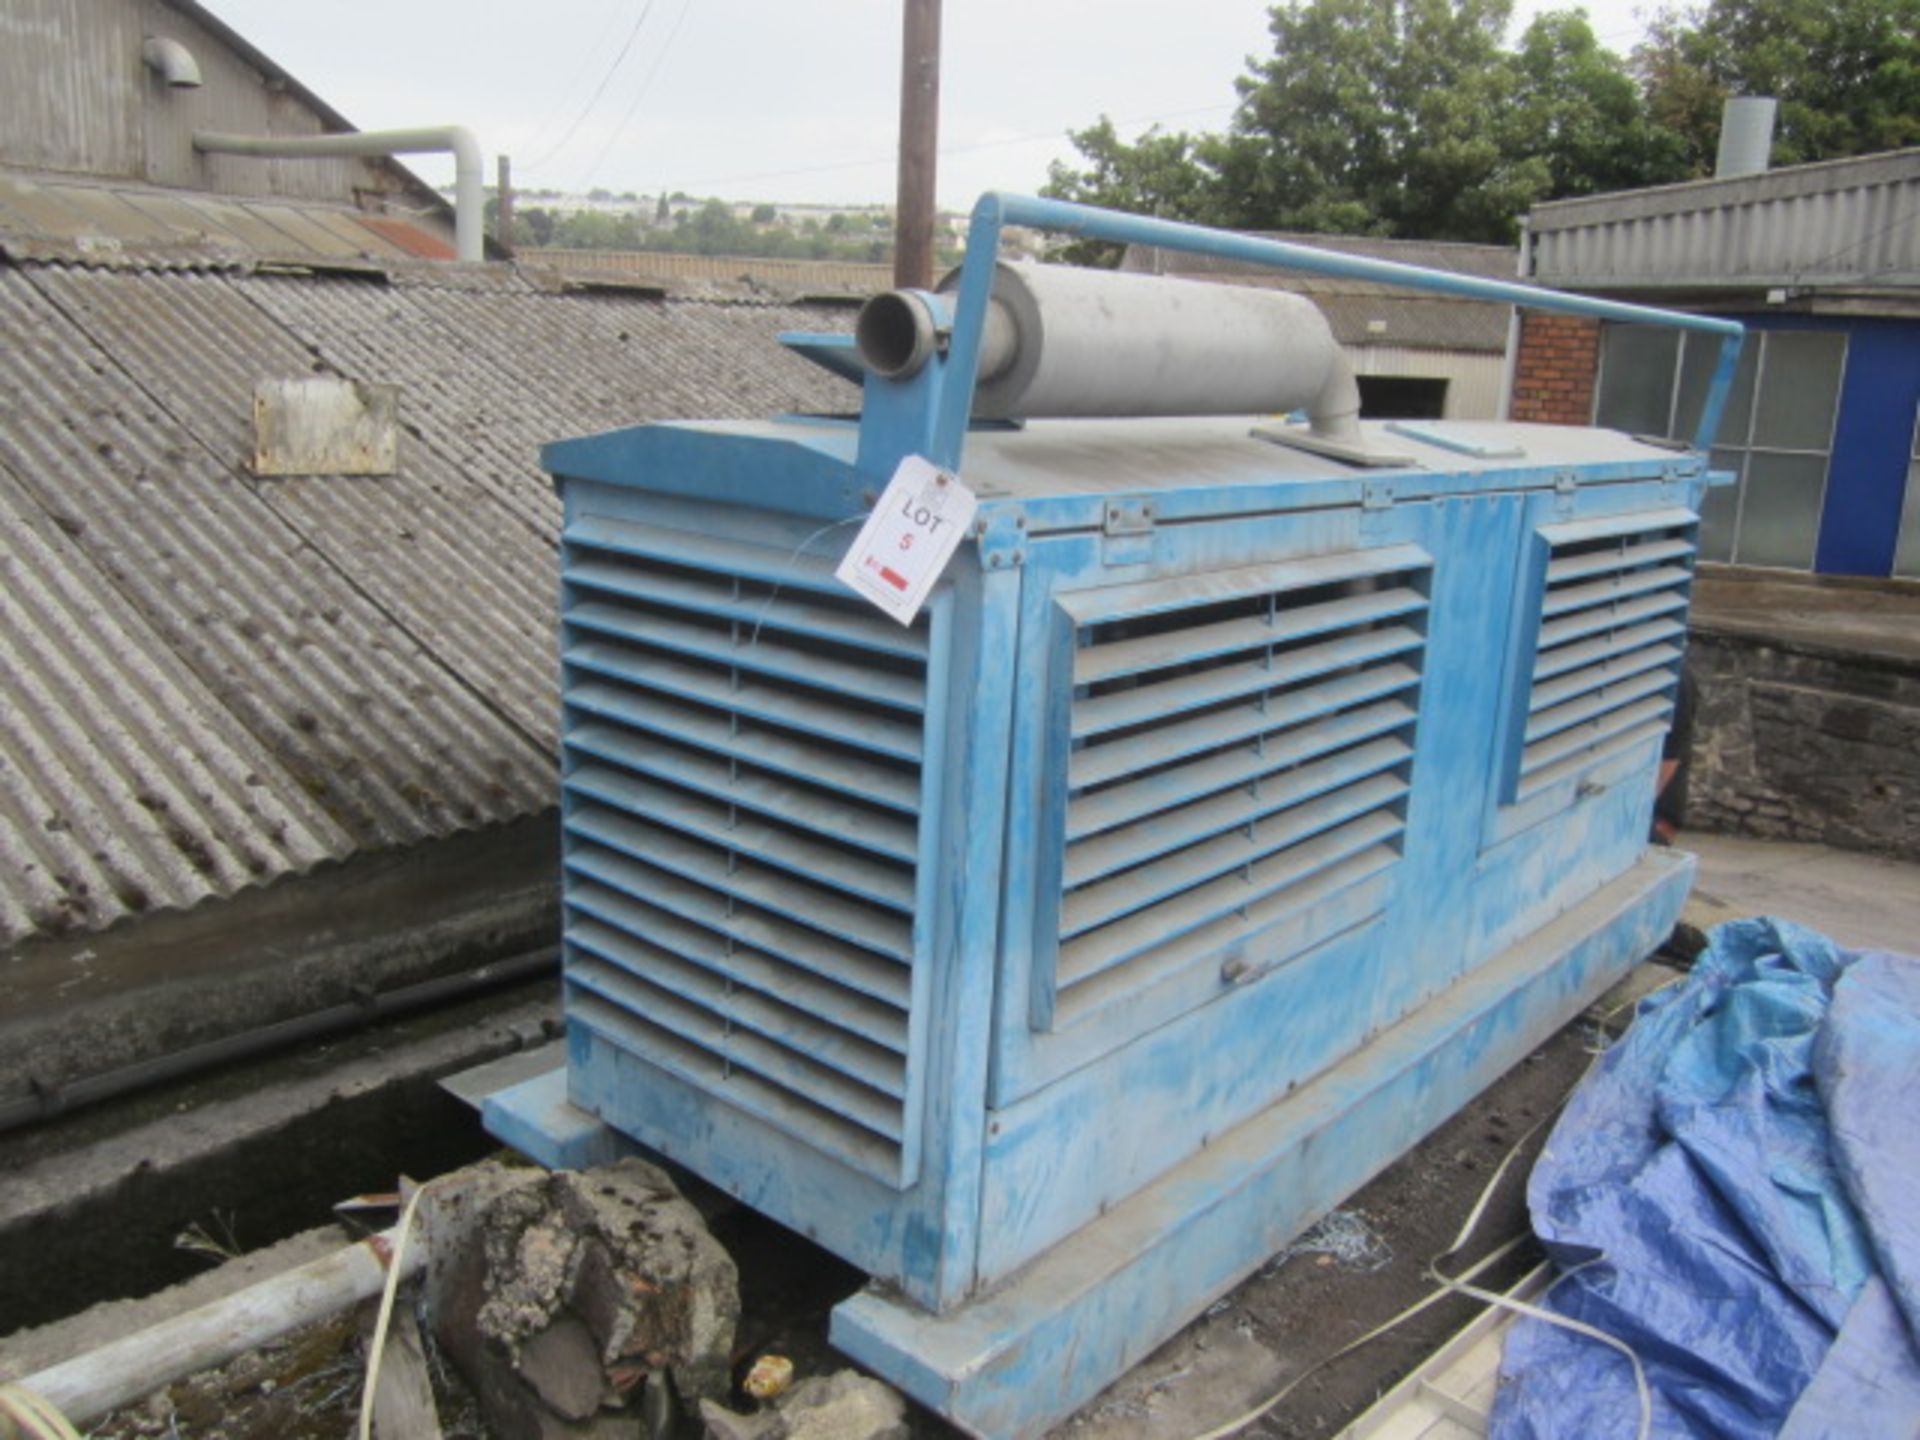 Countryman BTFHSC 100 stand by generator, skid mounted, Generator No. 2521 110, Engine No. 122460,